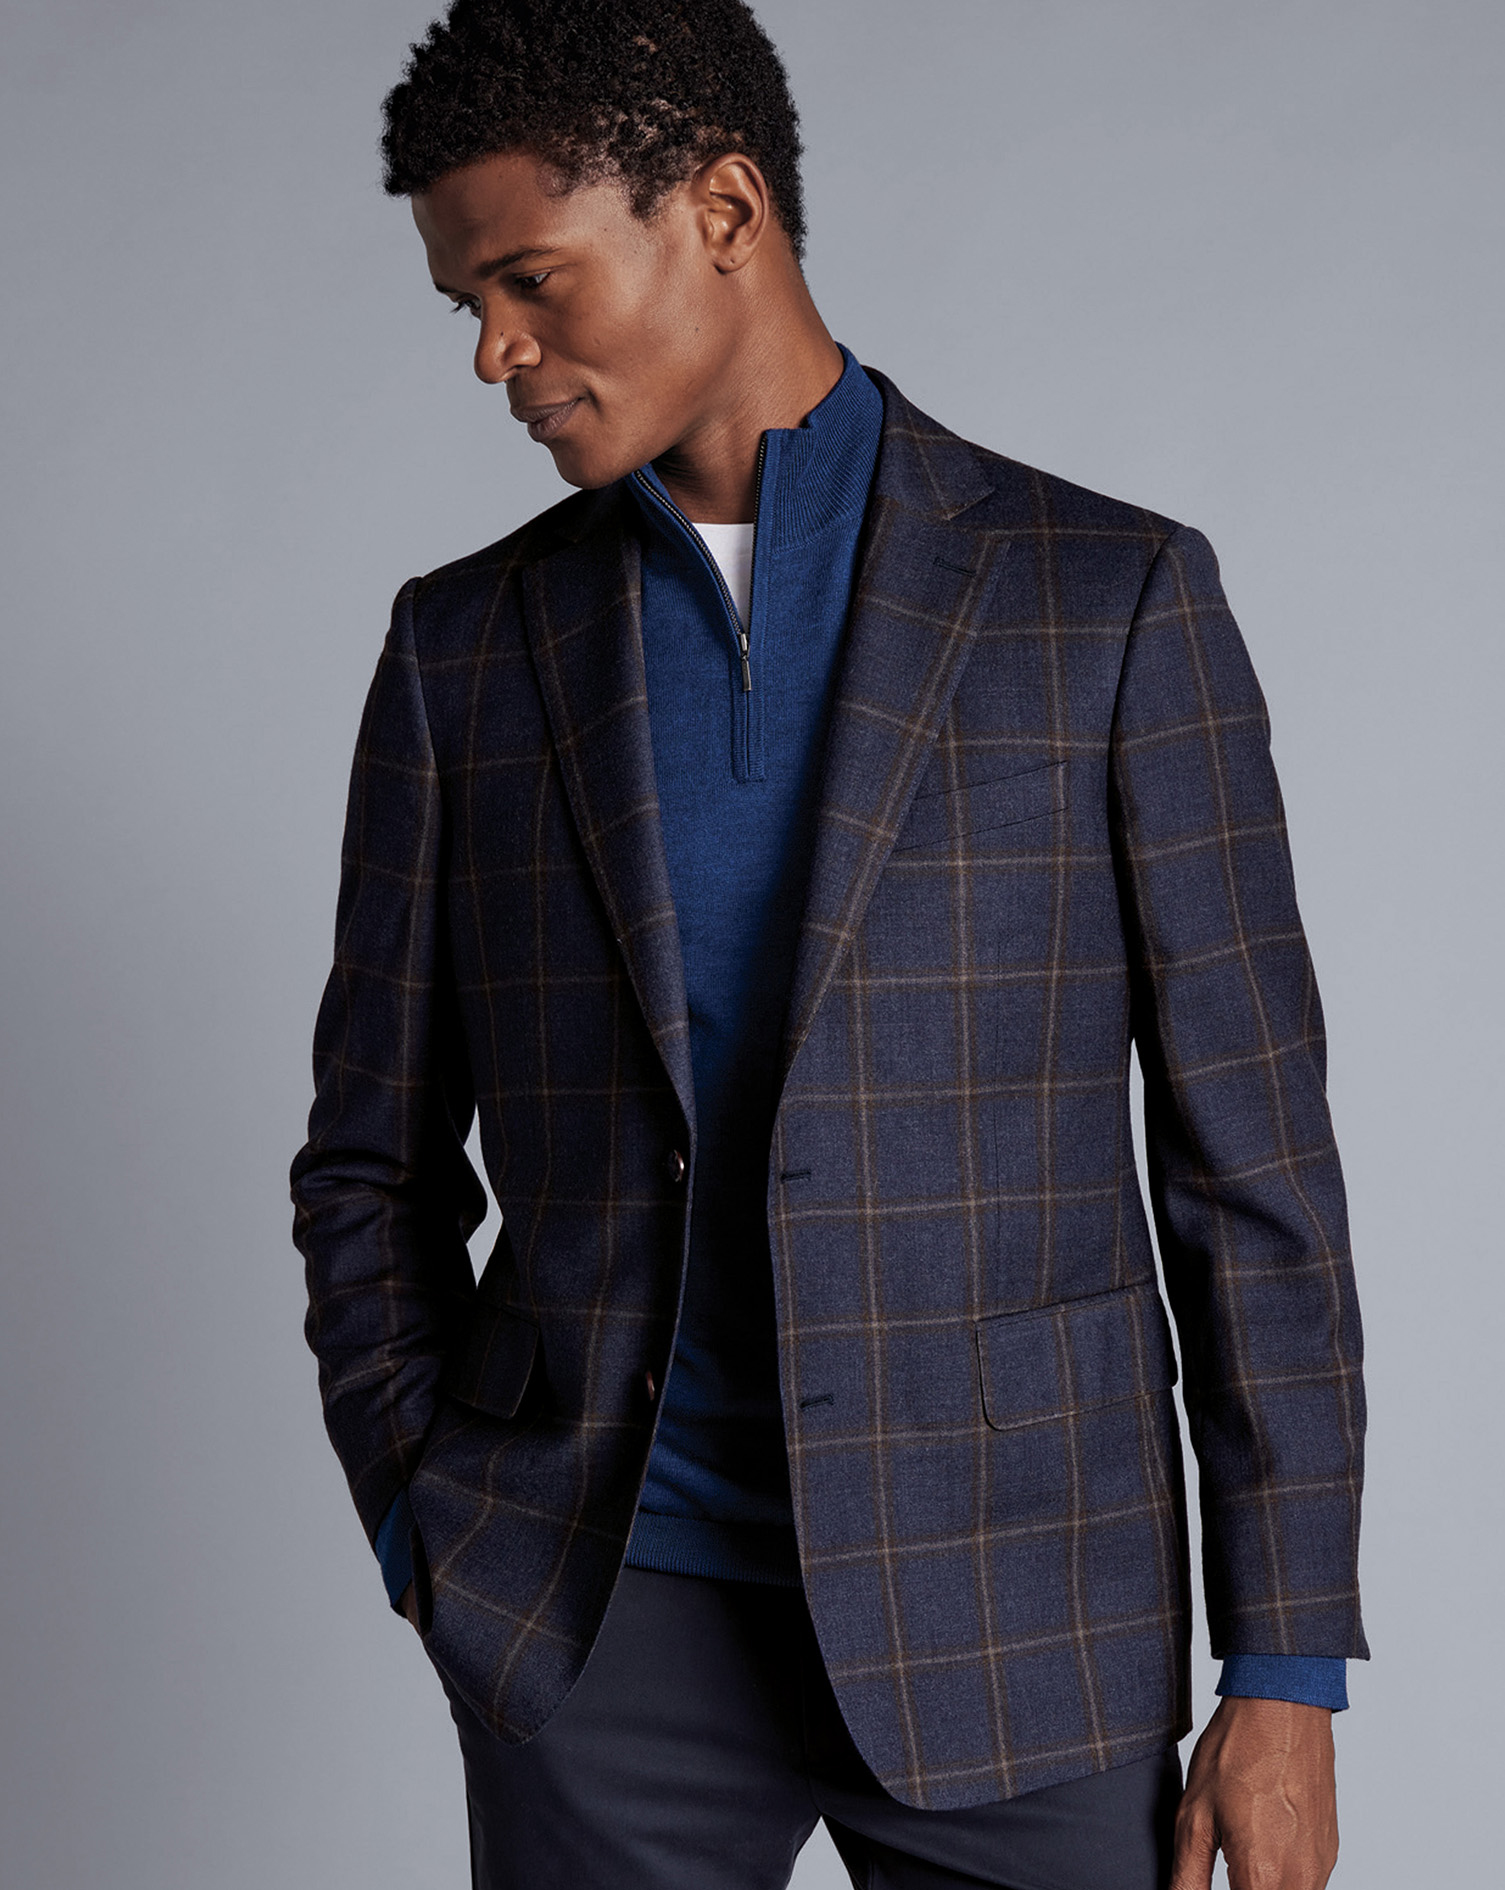 Men's Charles Tyrwhitt Checkered Windowpane Texture na Jacket - Steel Blue Size 38S Wool
